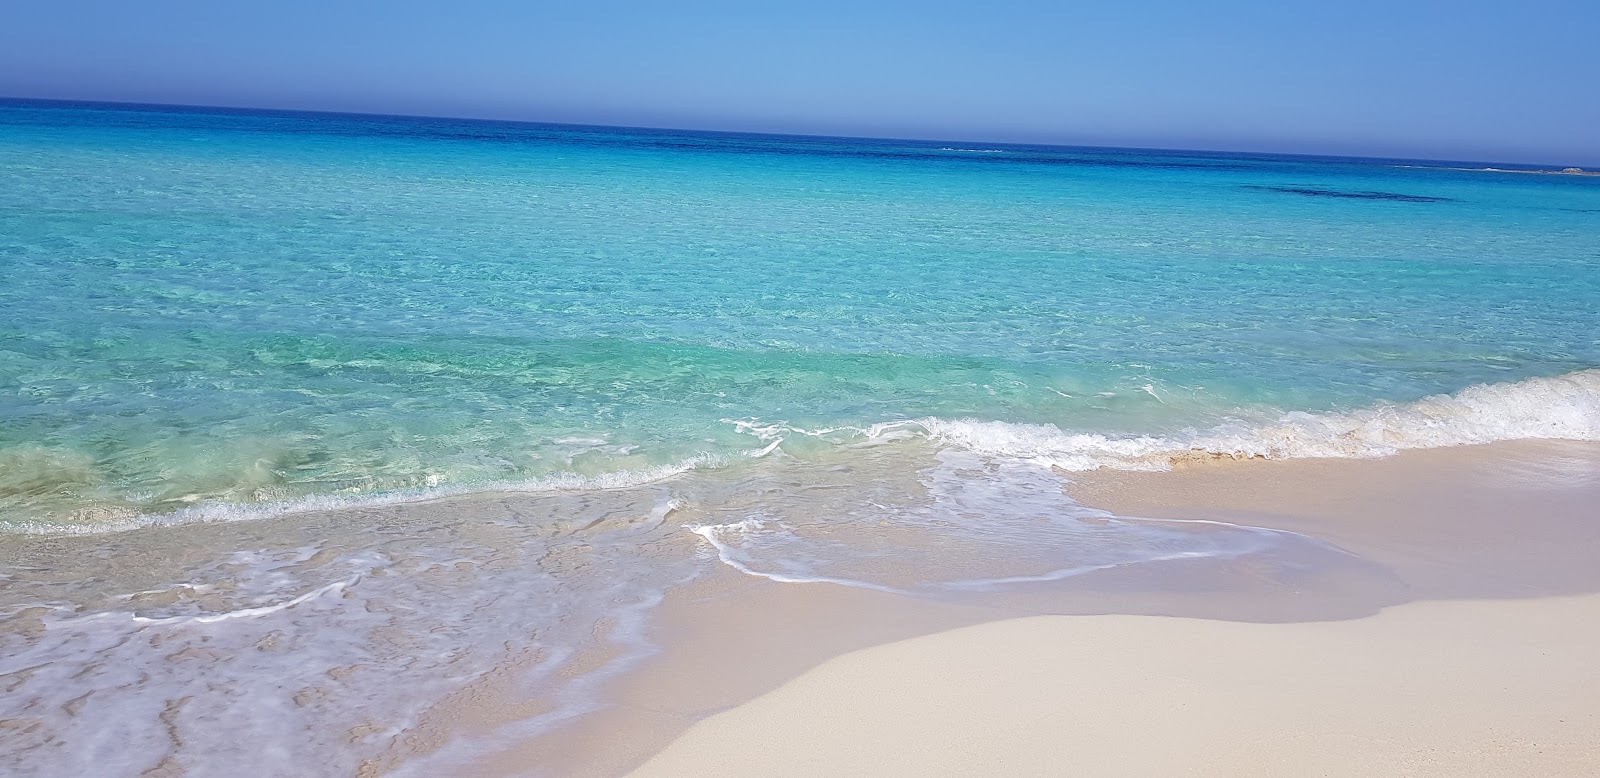 Foto de Marsa Baghush Beach - lugar popular entre os apreciadores de relaxamento